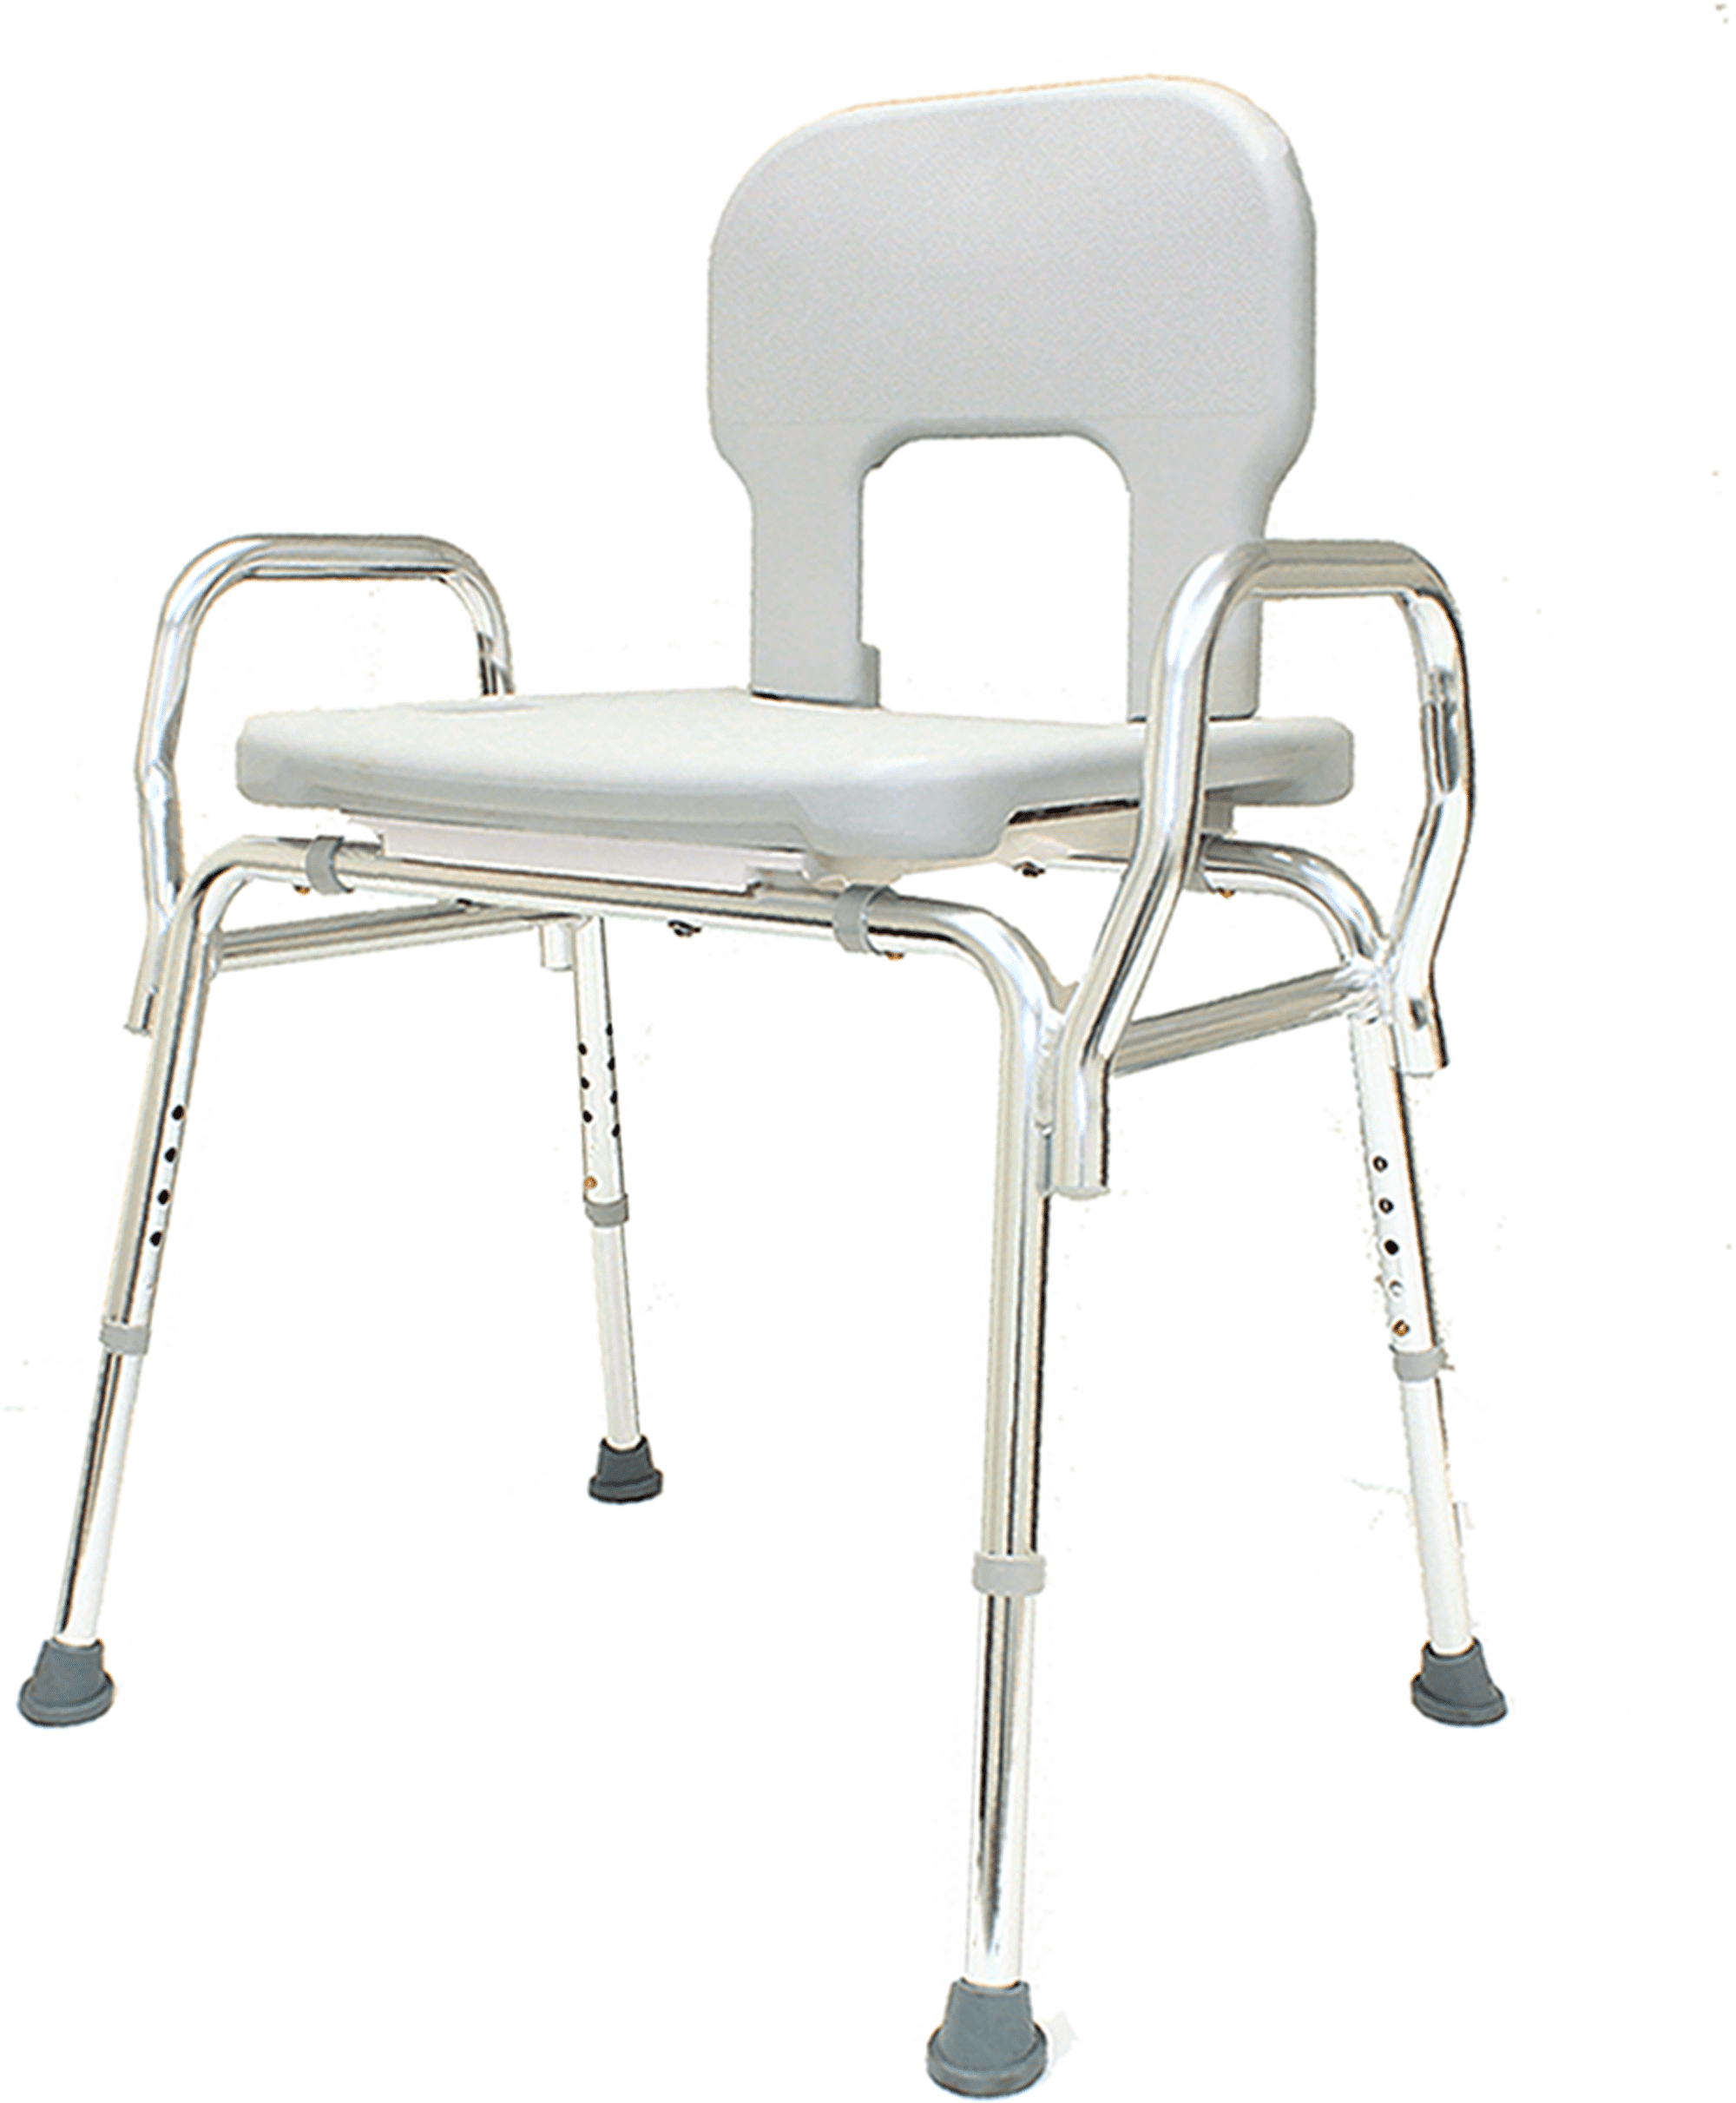 Bariatric Shower Chair 72621 Base Length 27 5 28 25 Heavy Duty Bath Seat Chair